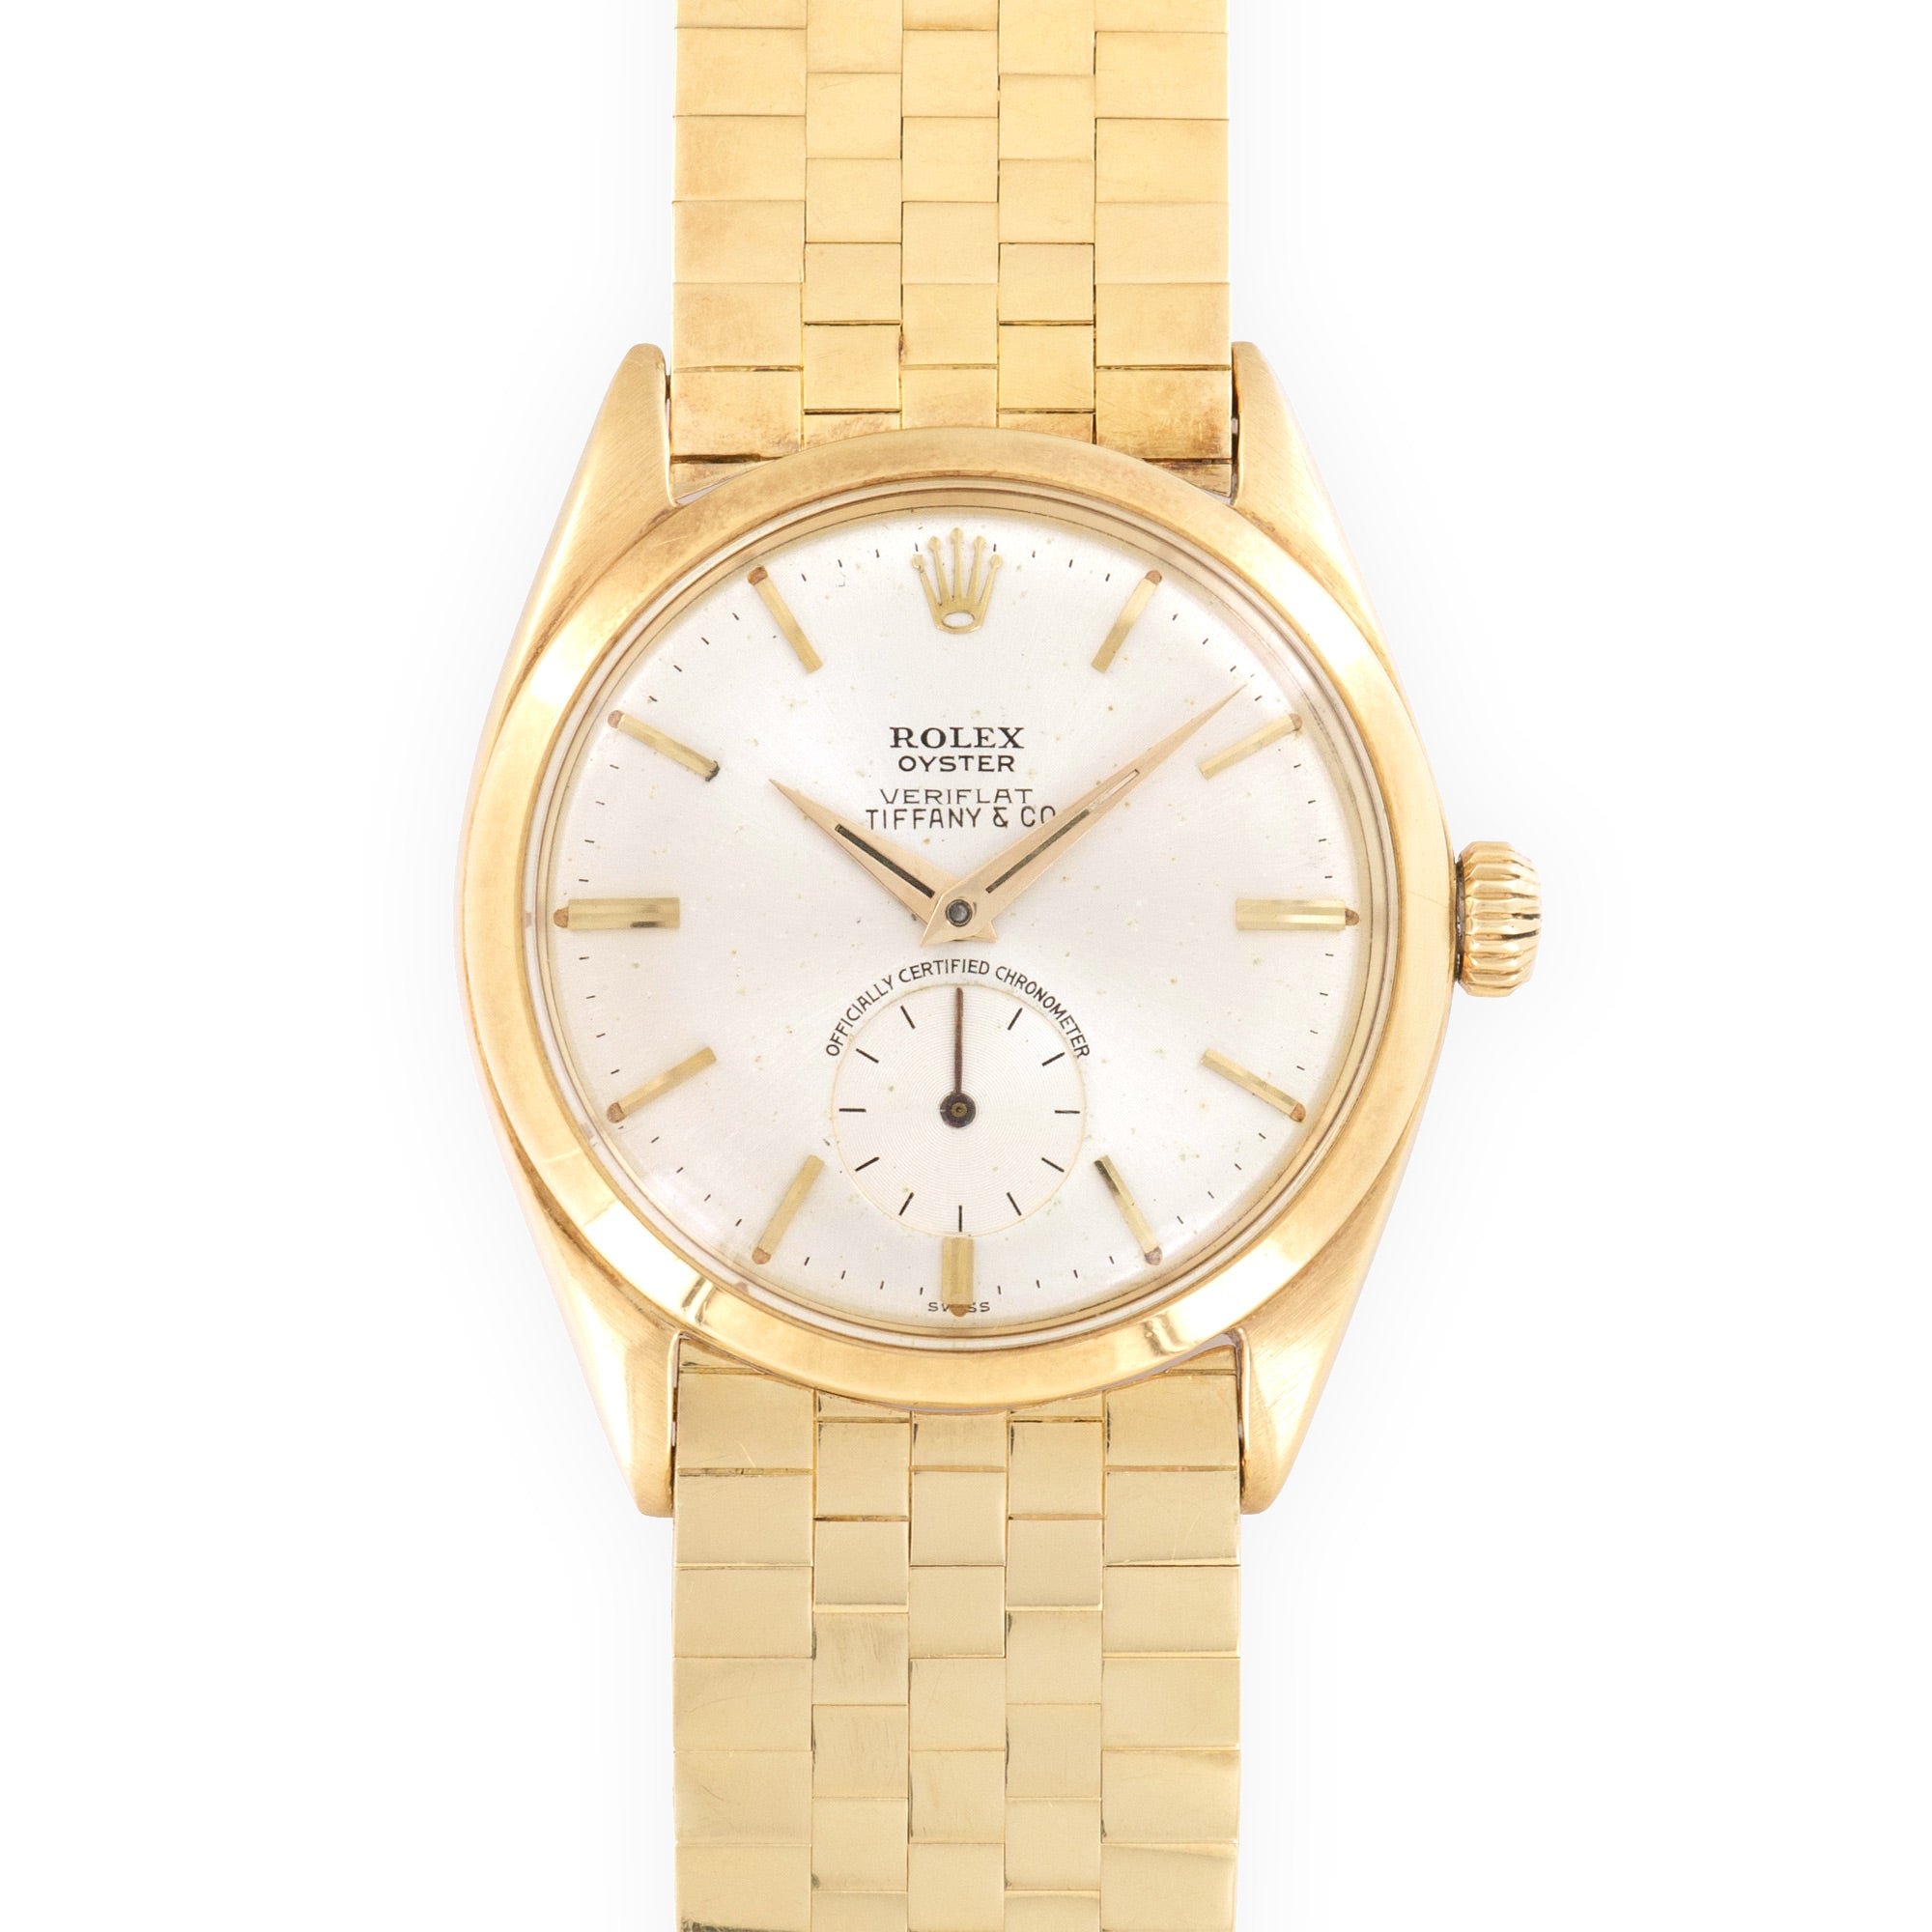 Rolex - Rolex Yellow Gold Veriflat Watch Ref. 6512, Retailed by Tiffany & Co. - The Keystone Watches